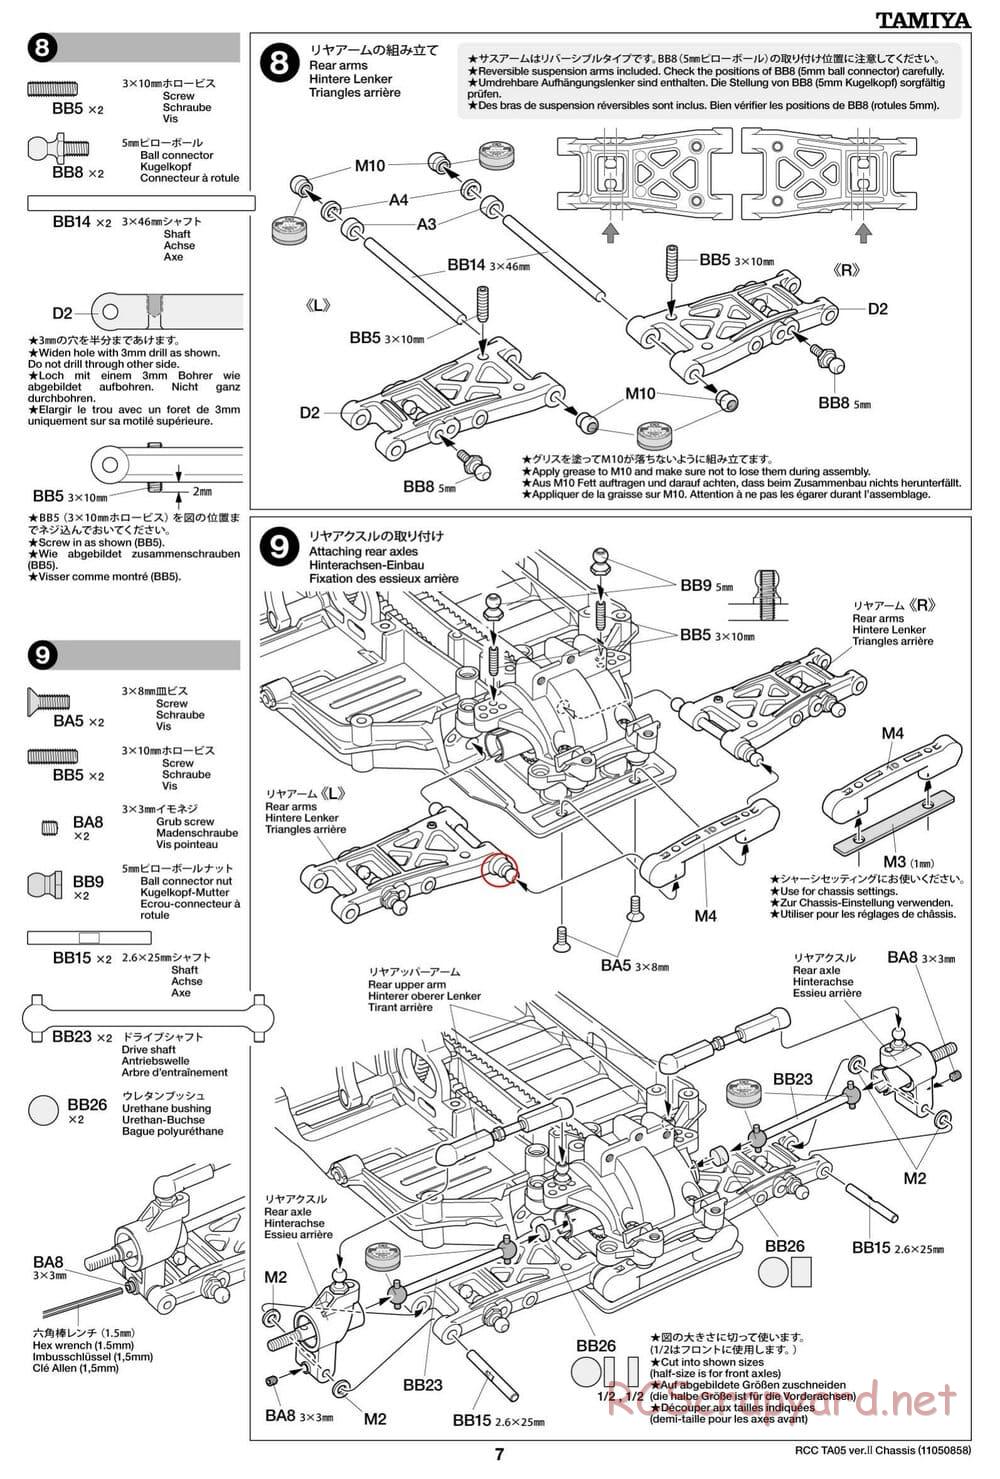 Tamiya - TA05 Ver.II Chassis - Manual - Page 7